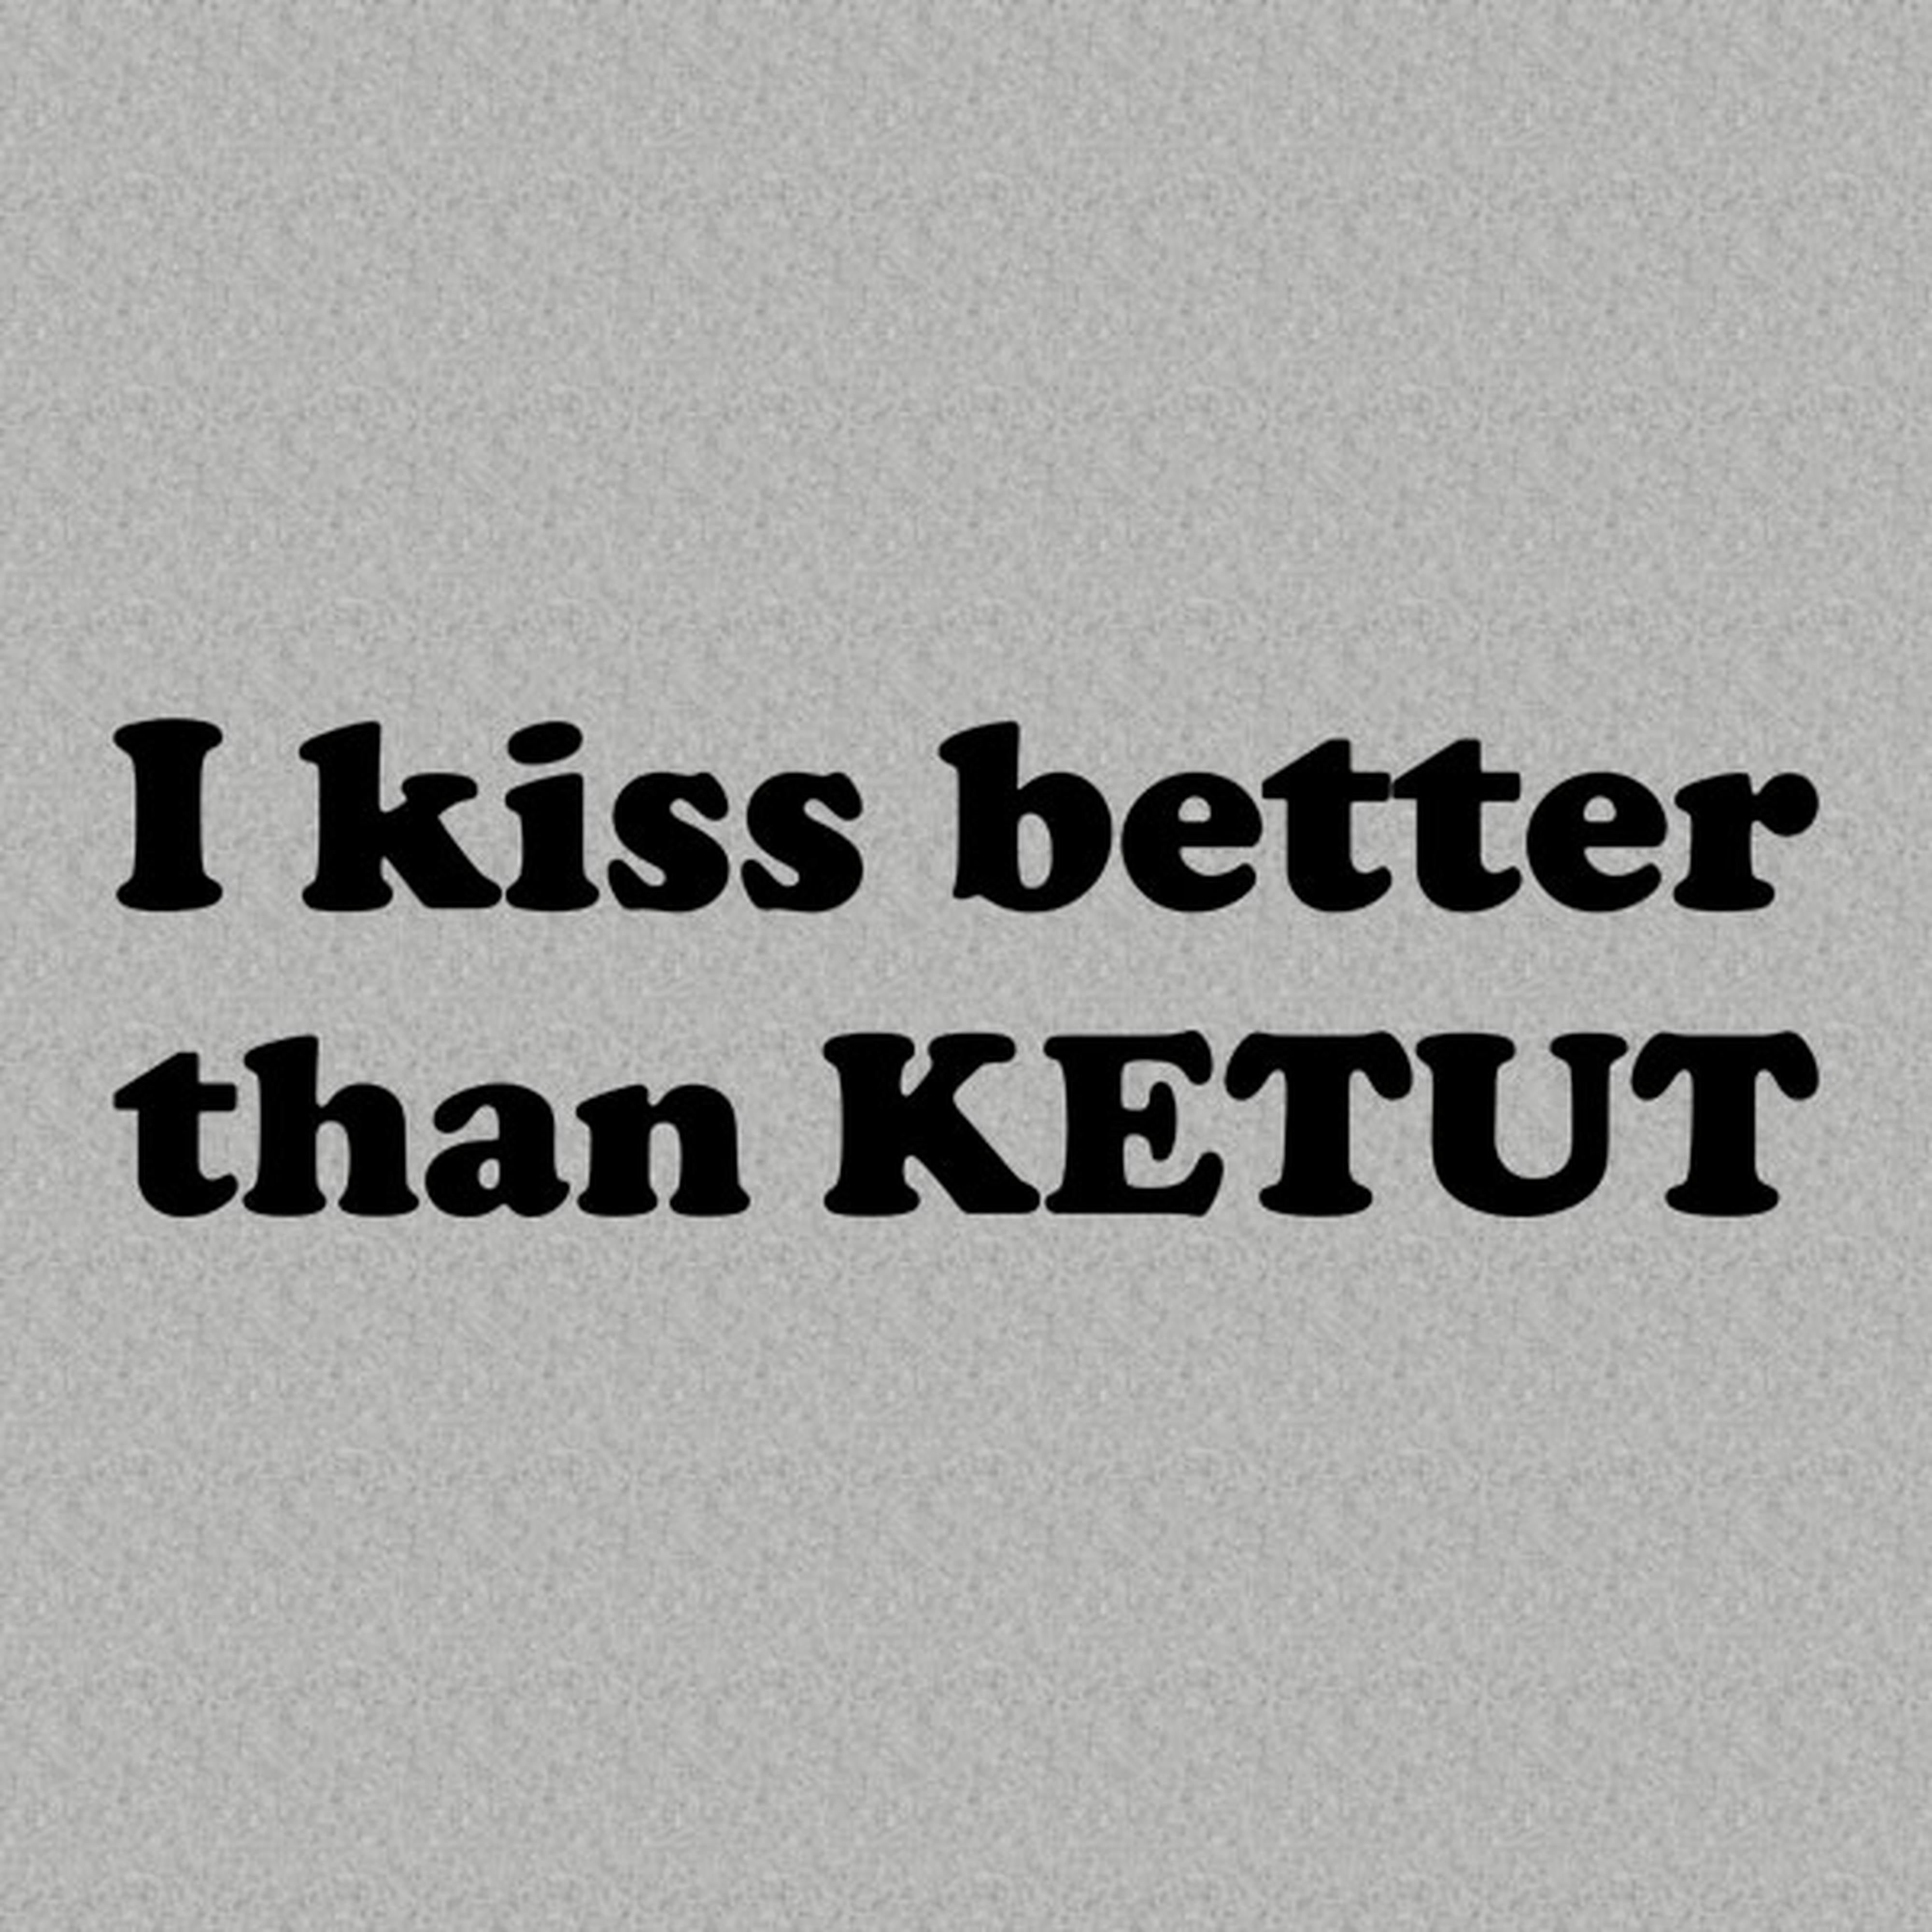 funny-t-shirt-i-kiss-better-than-ketut